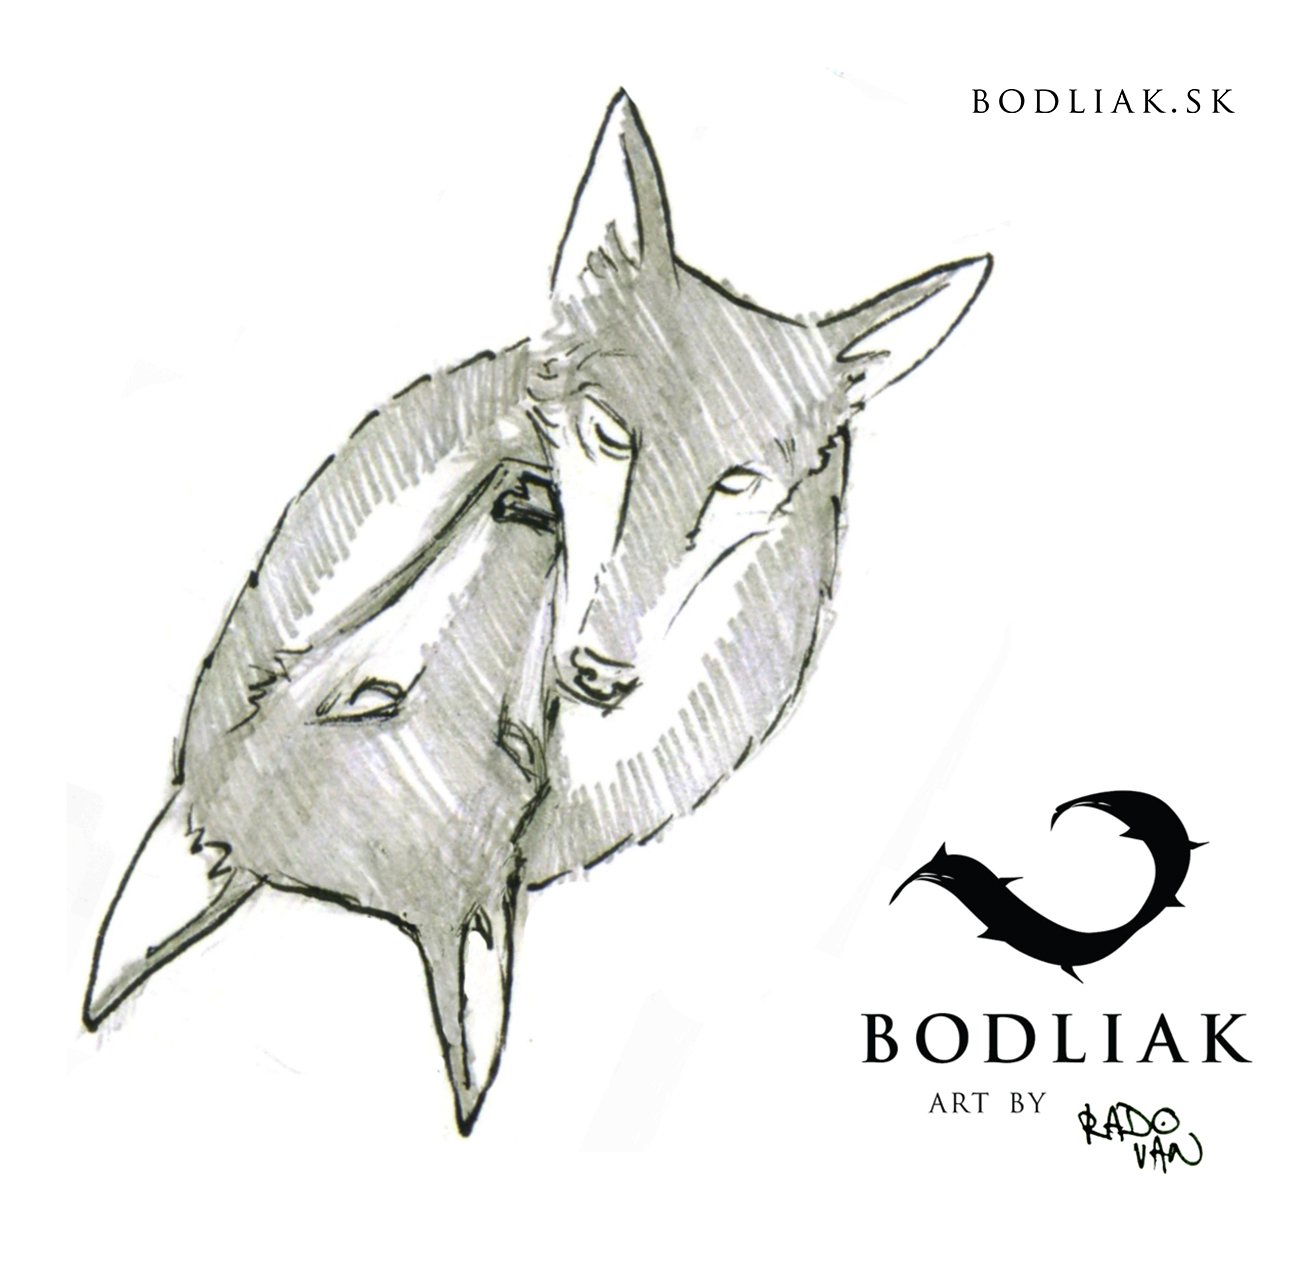  bodliak-bodliaktattoo-motiv-design-original-radovan-tetovanie-tattoo-black-blacktattoo-foxs-lisky-zviera 